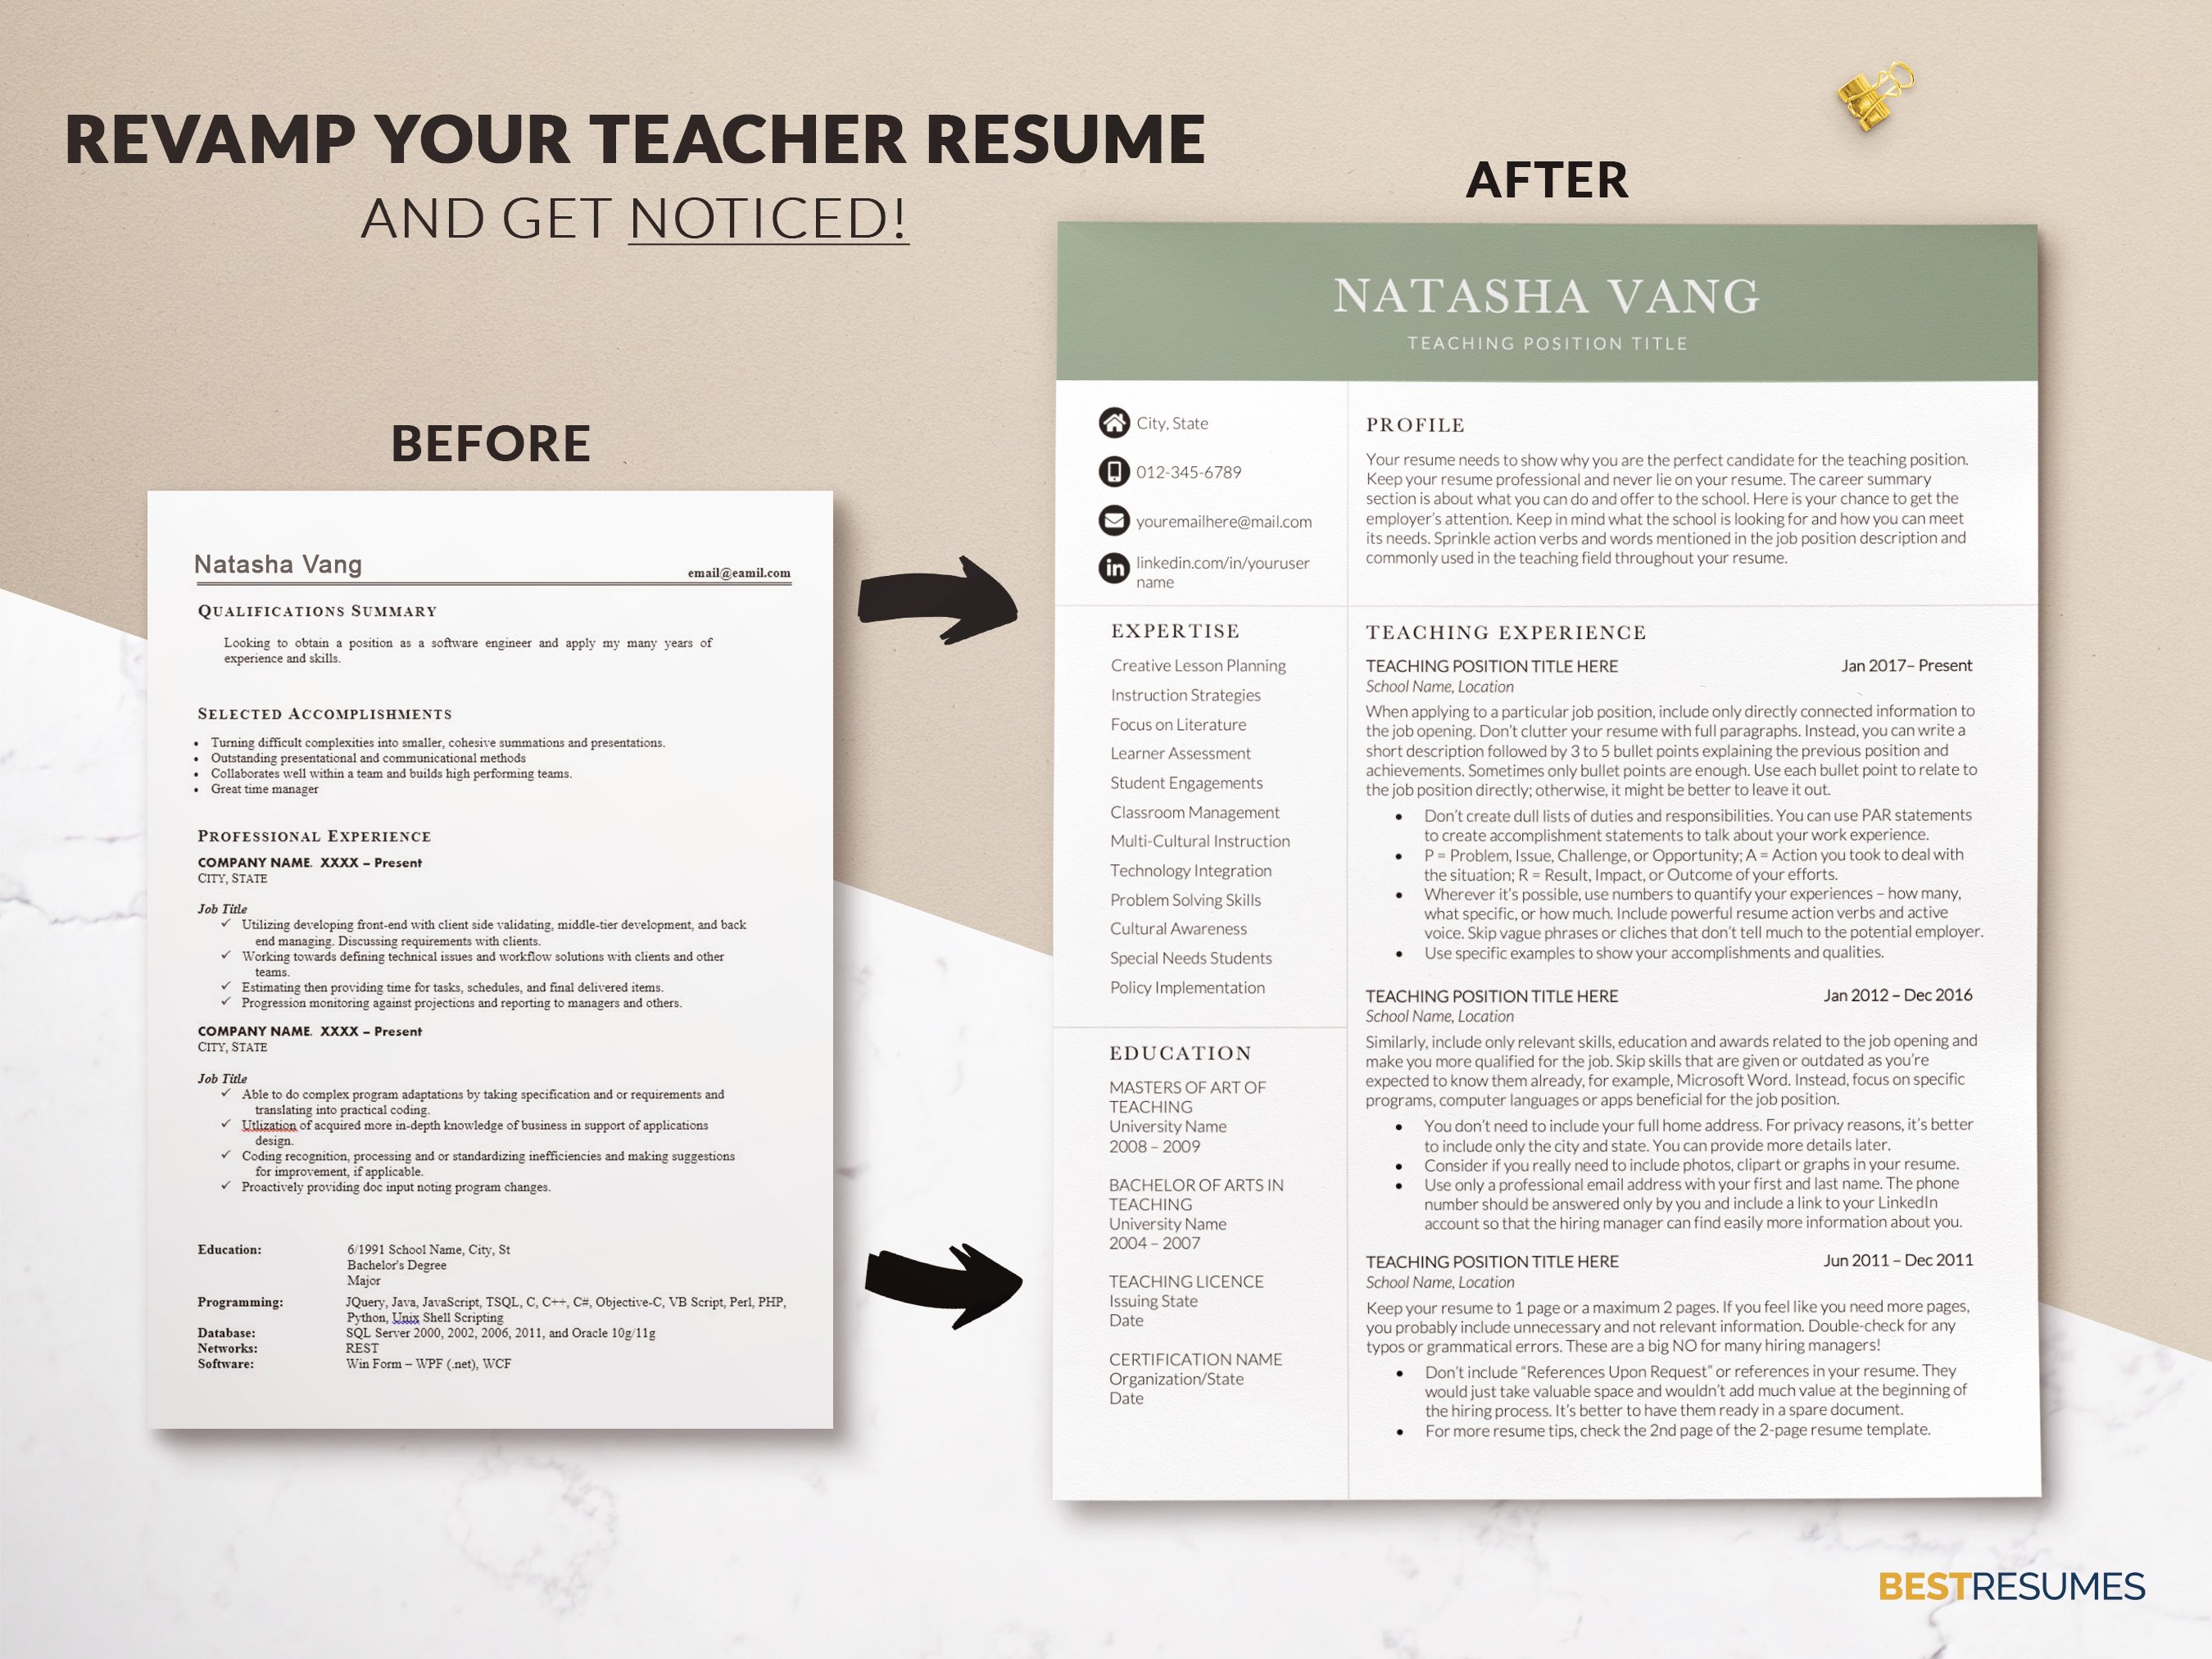 professional resume for teachers template revamp your teacher resume natasha vang 199